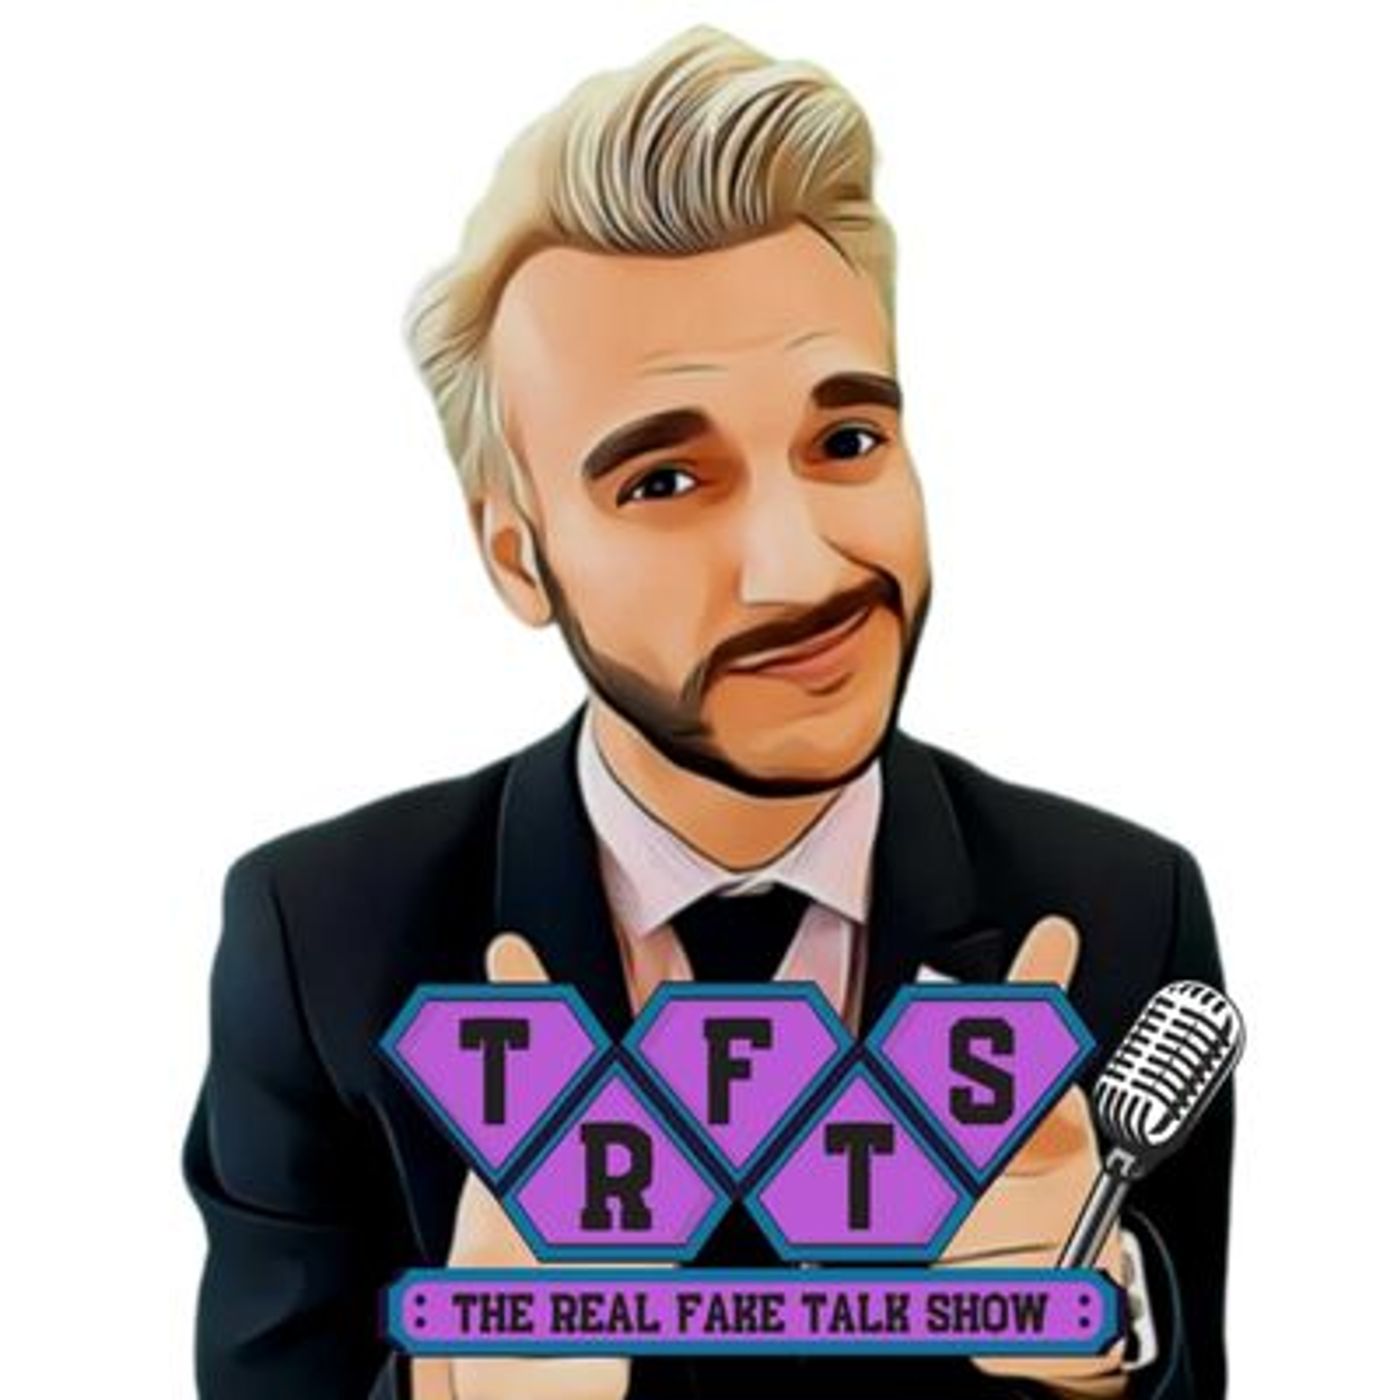 NY Patriot, Lux & The Real Fake Talk Show